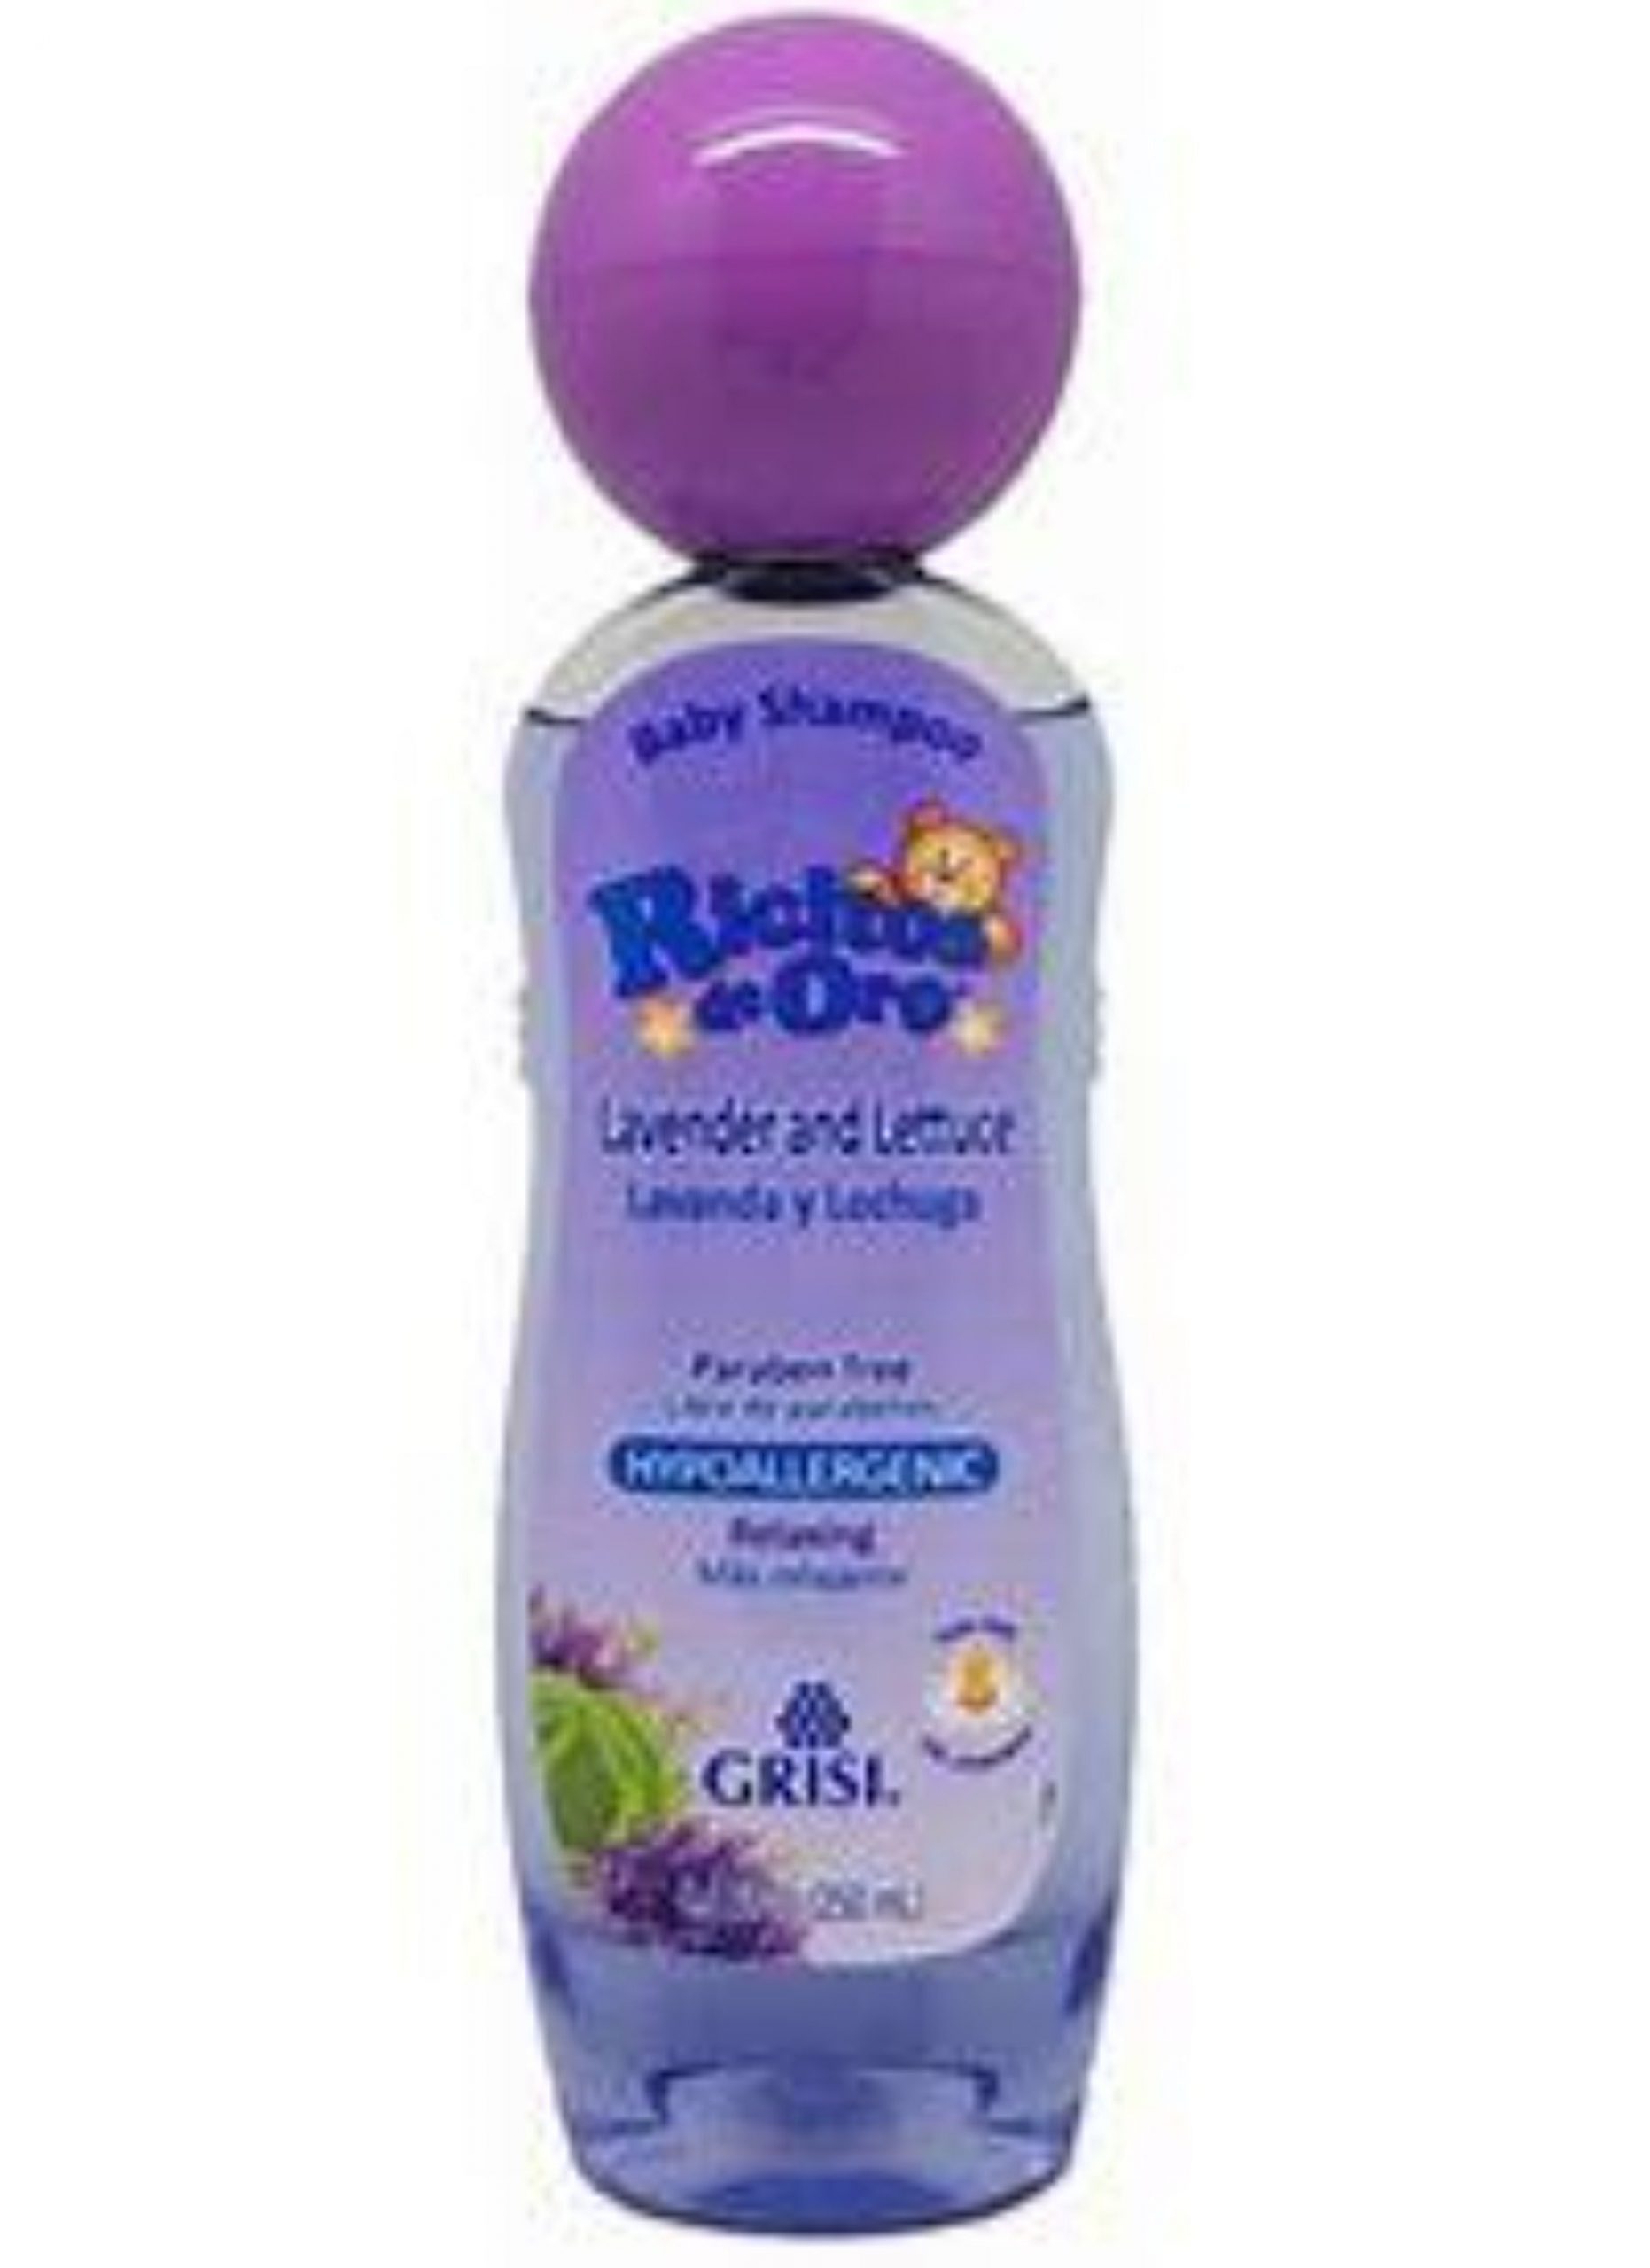 Grisi Ricitos de Oro Lavender & Lettuce Shampoo 8.4 oz